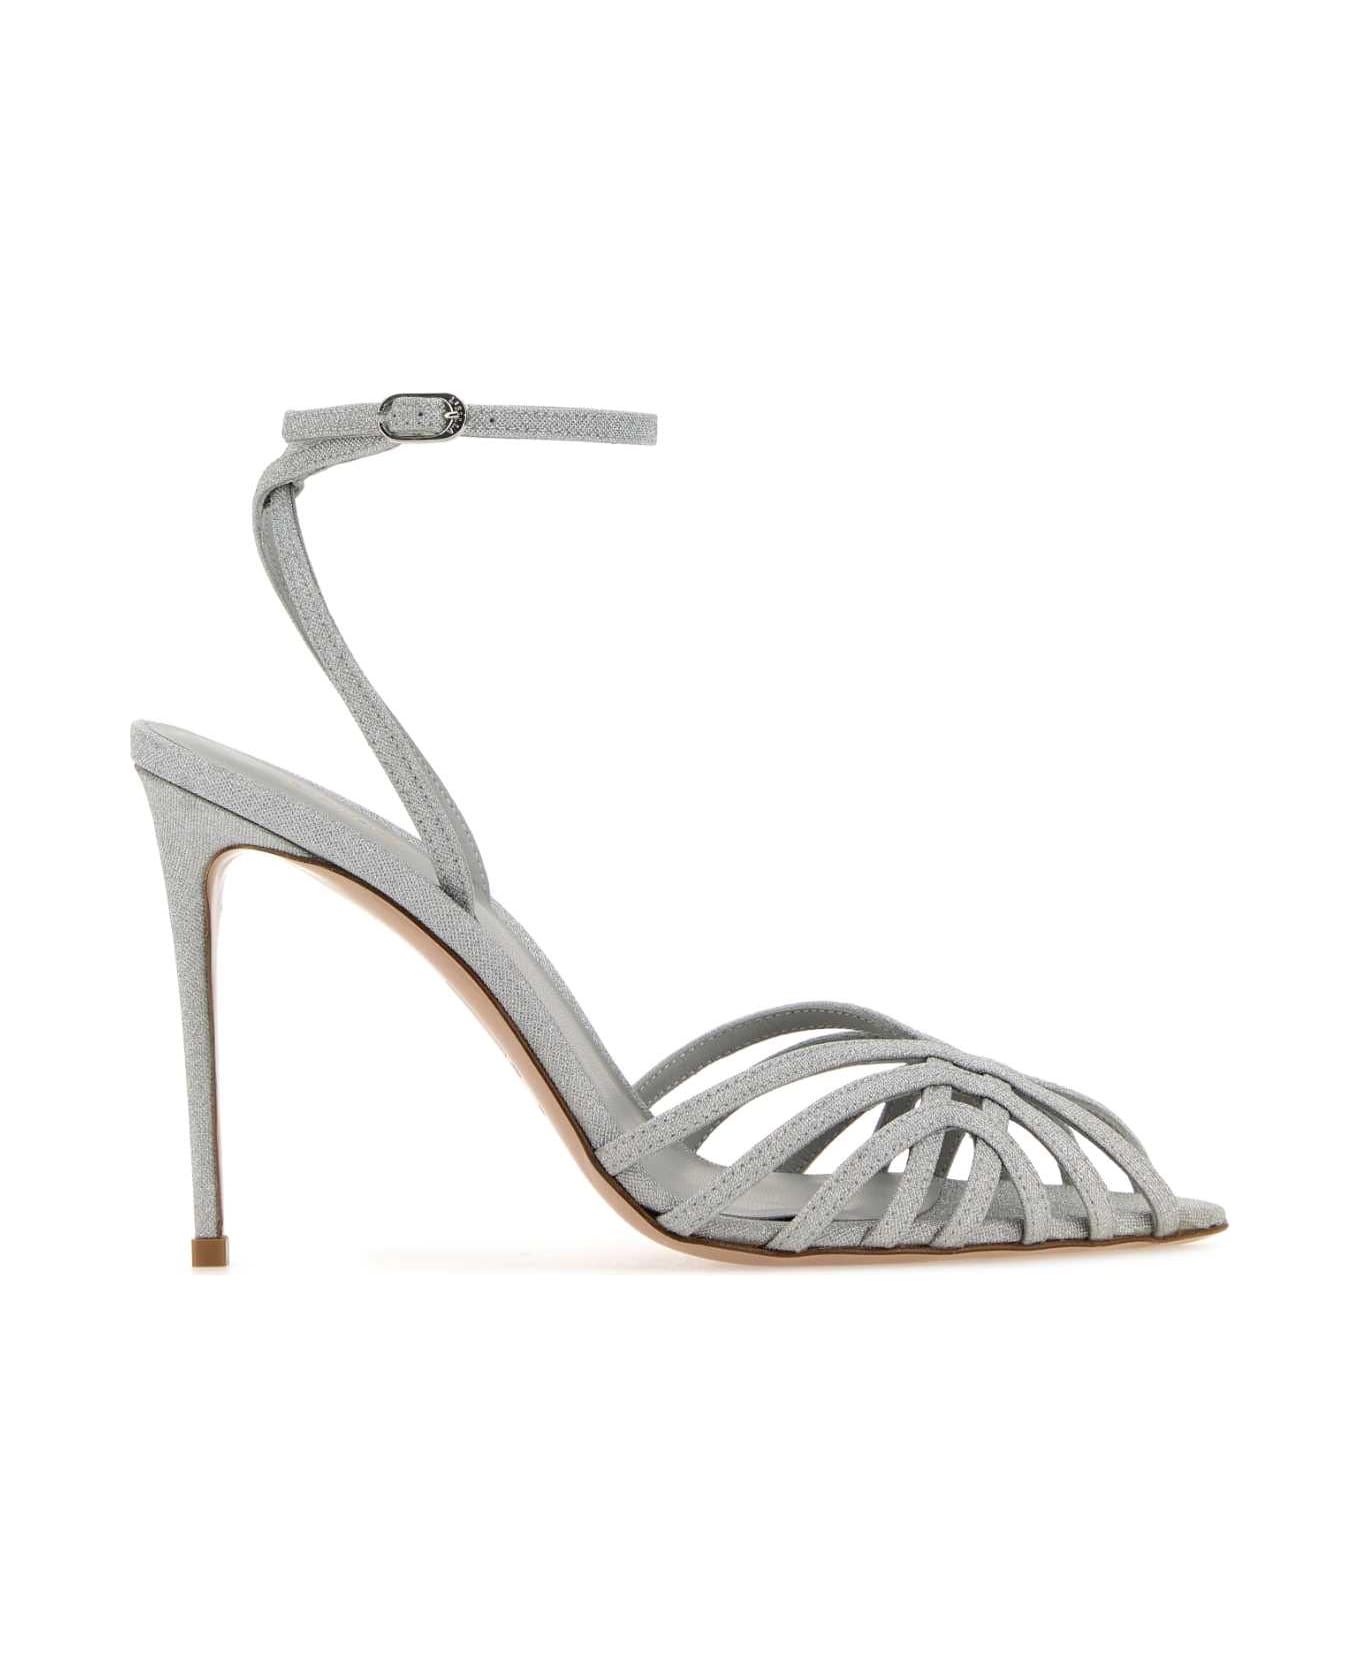 Le Silla Silver Fabric Embrace Sandals - ARGENTO サンダル